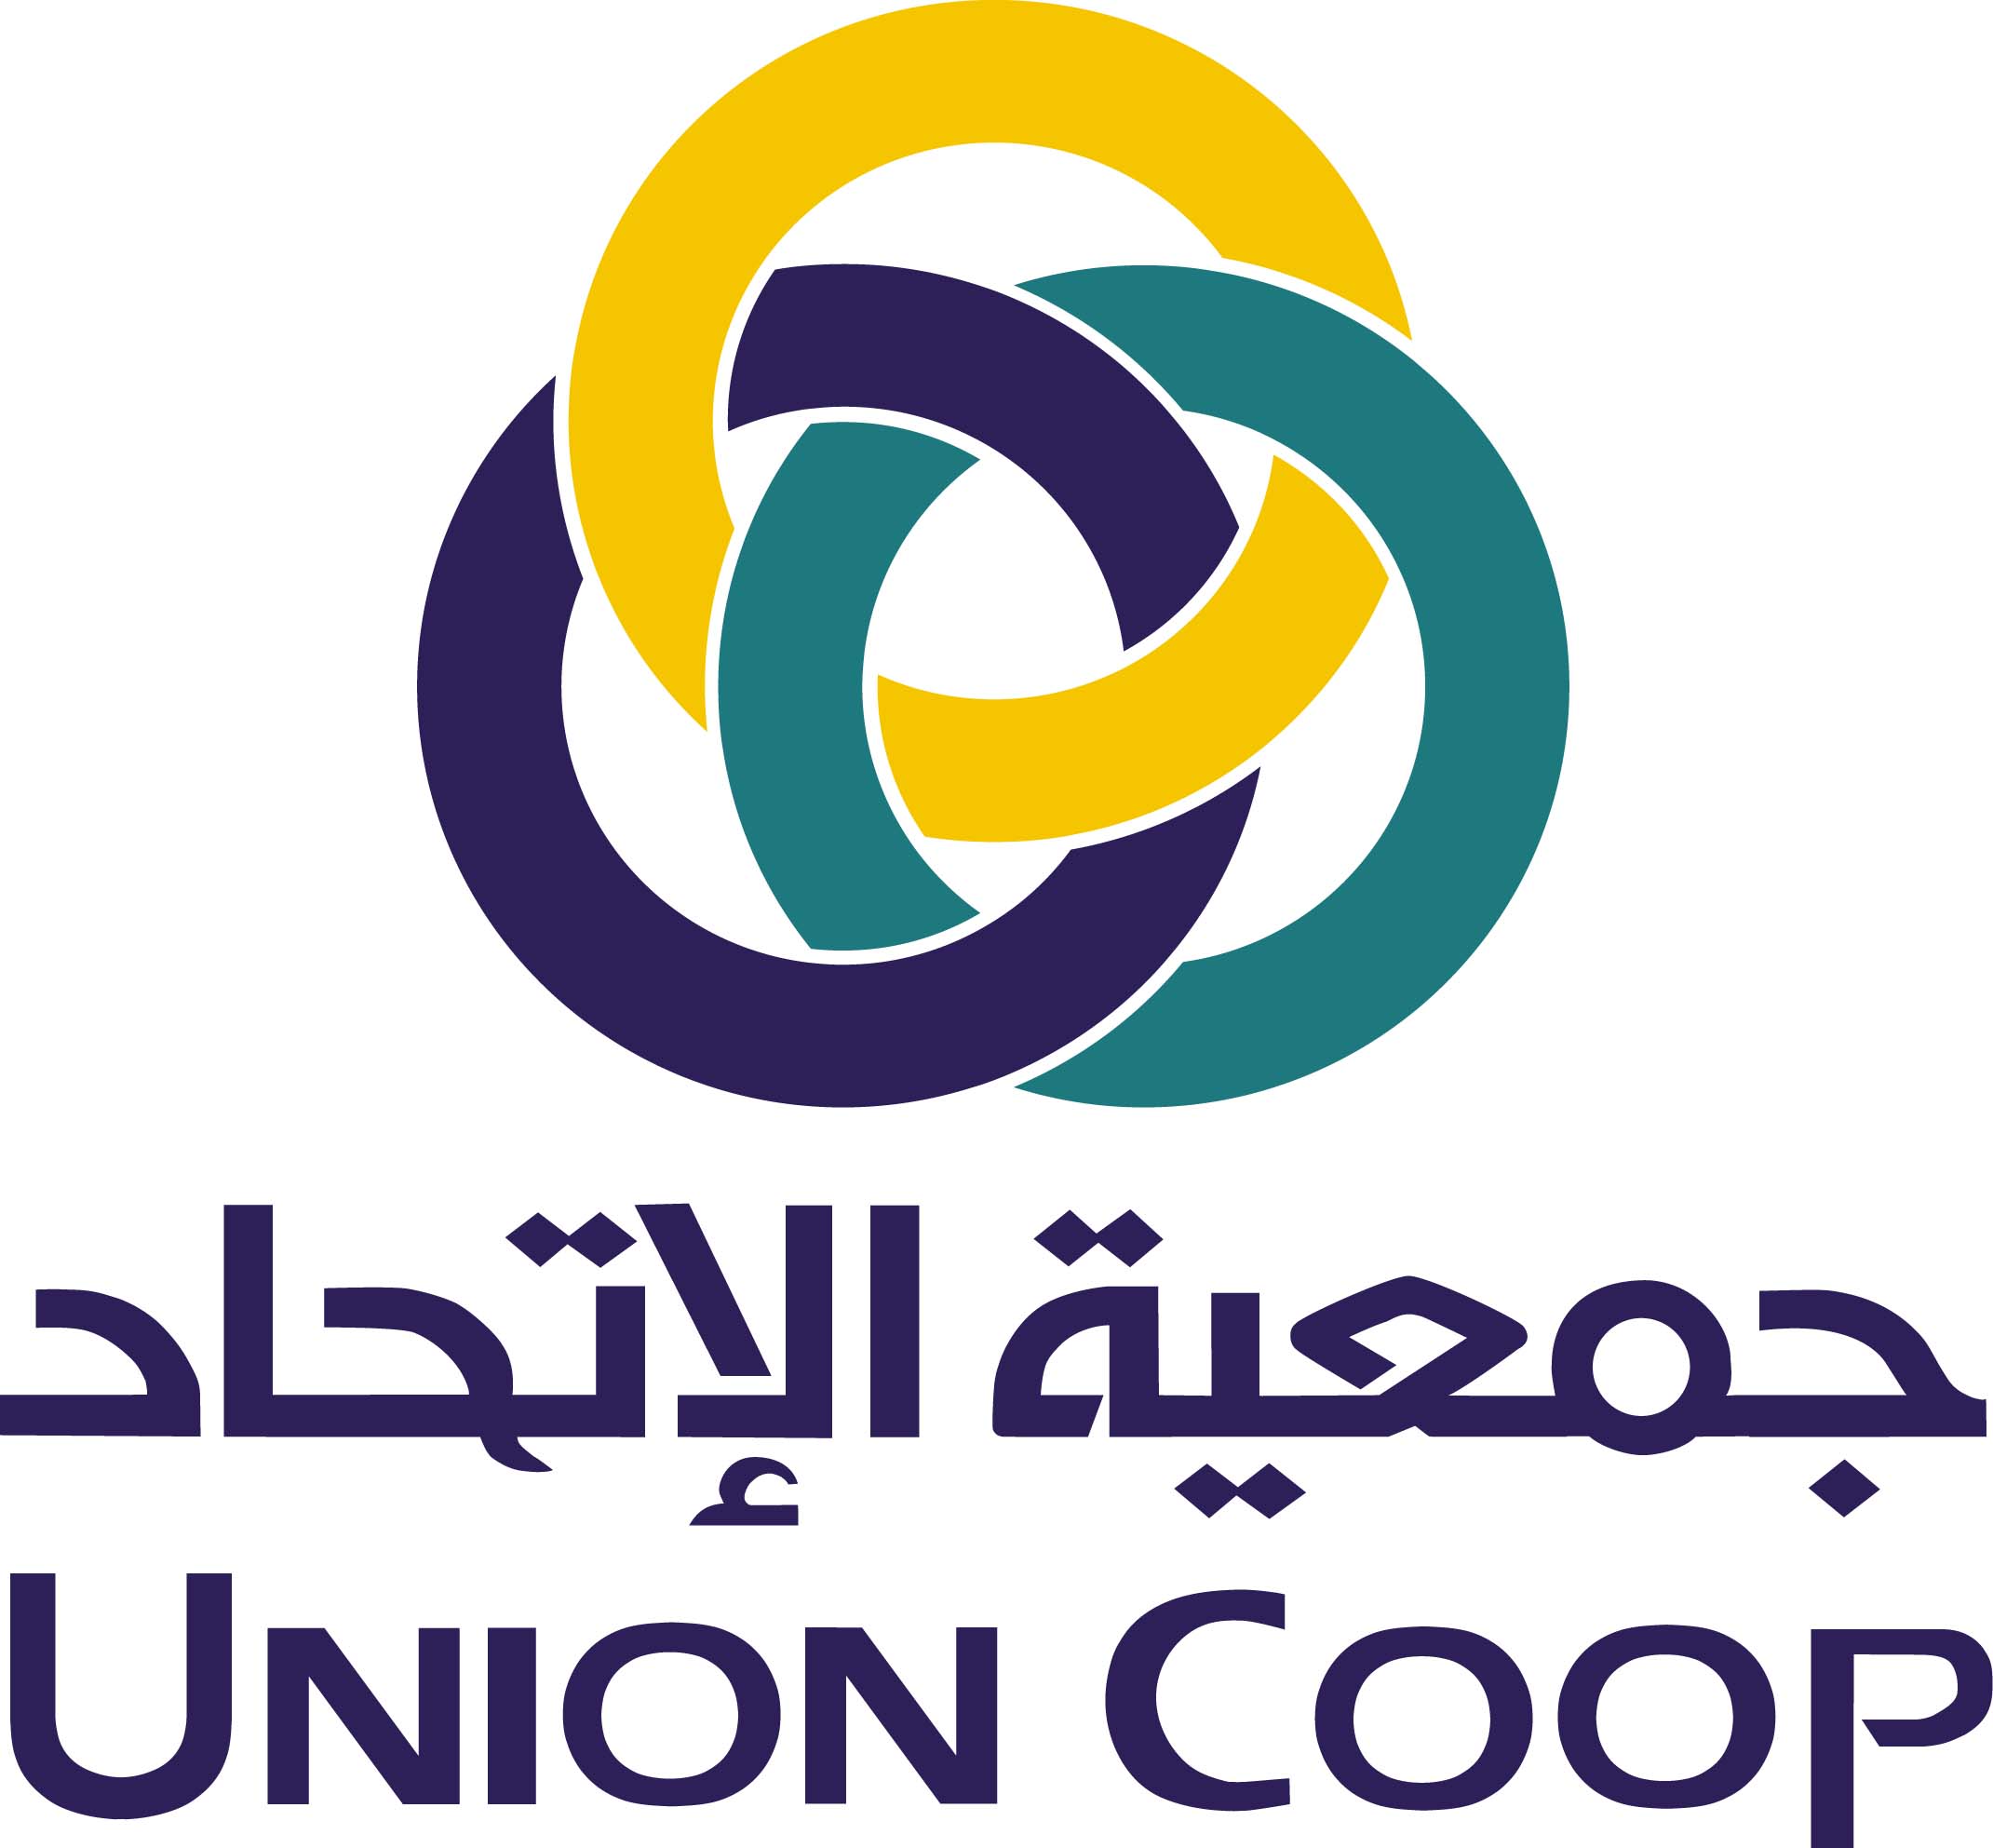 Union Coop Brand Logo